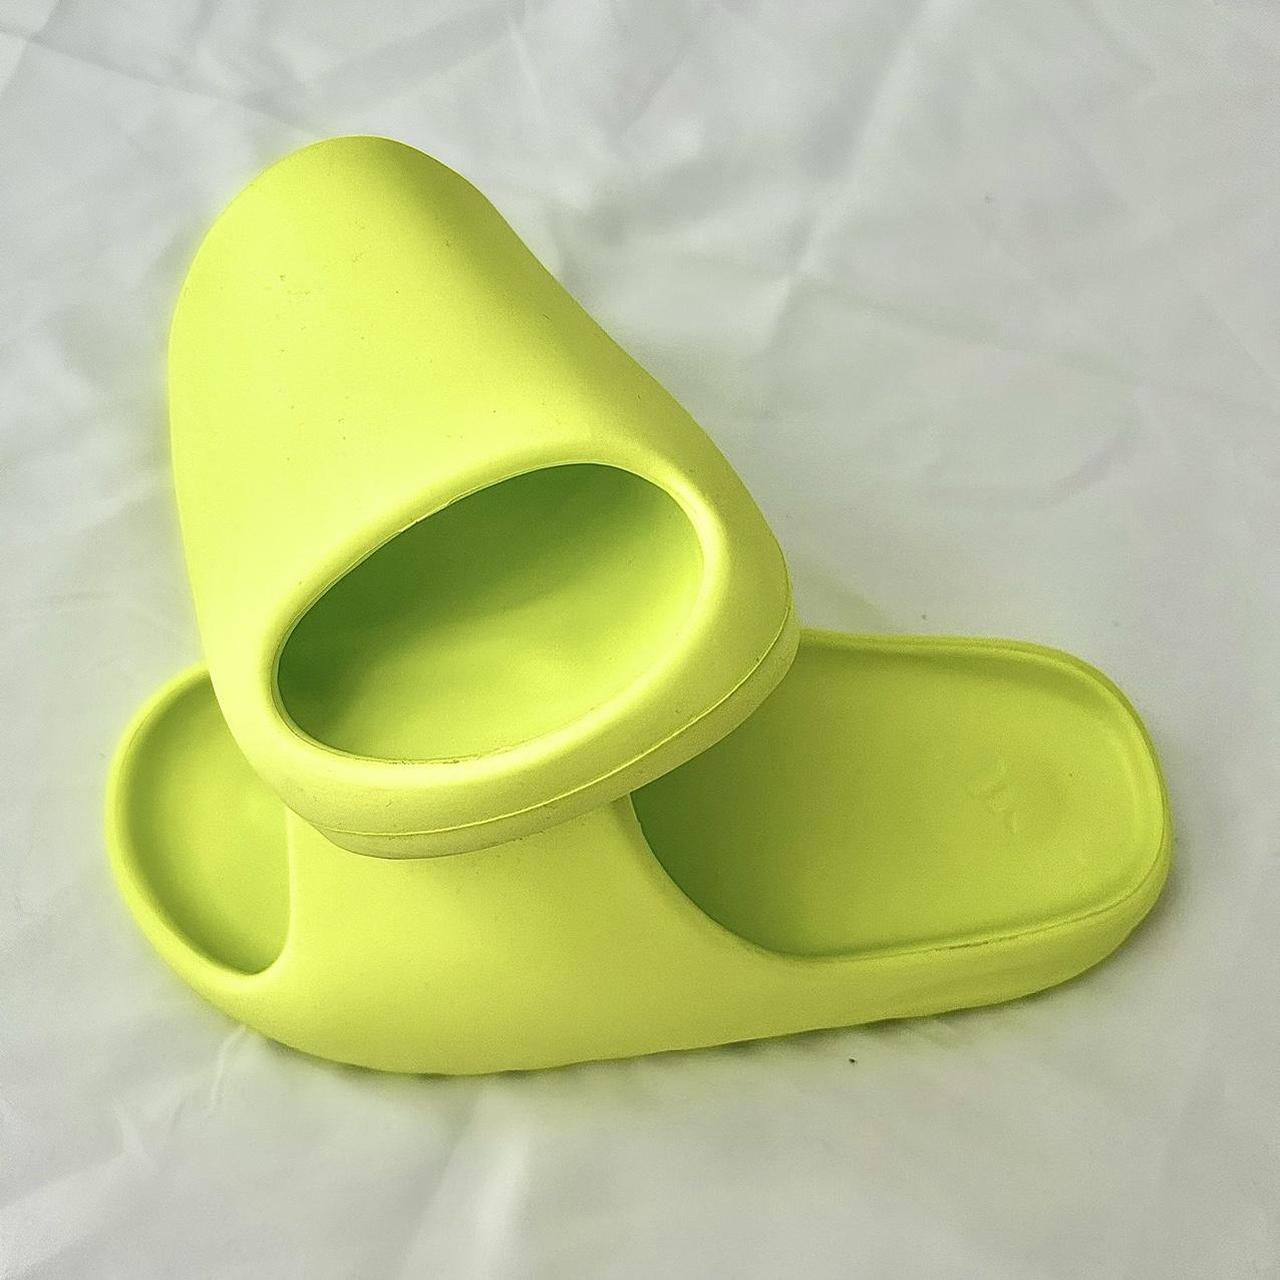 Yeezy Women's Green and Yellow Slides (3)